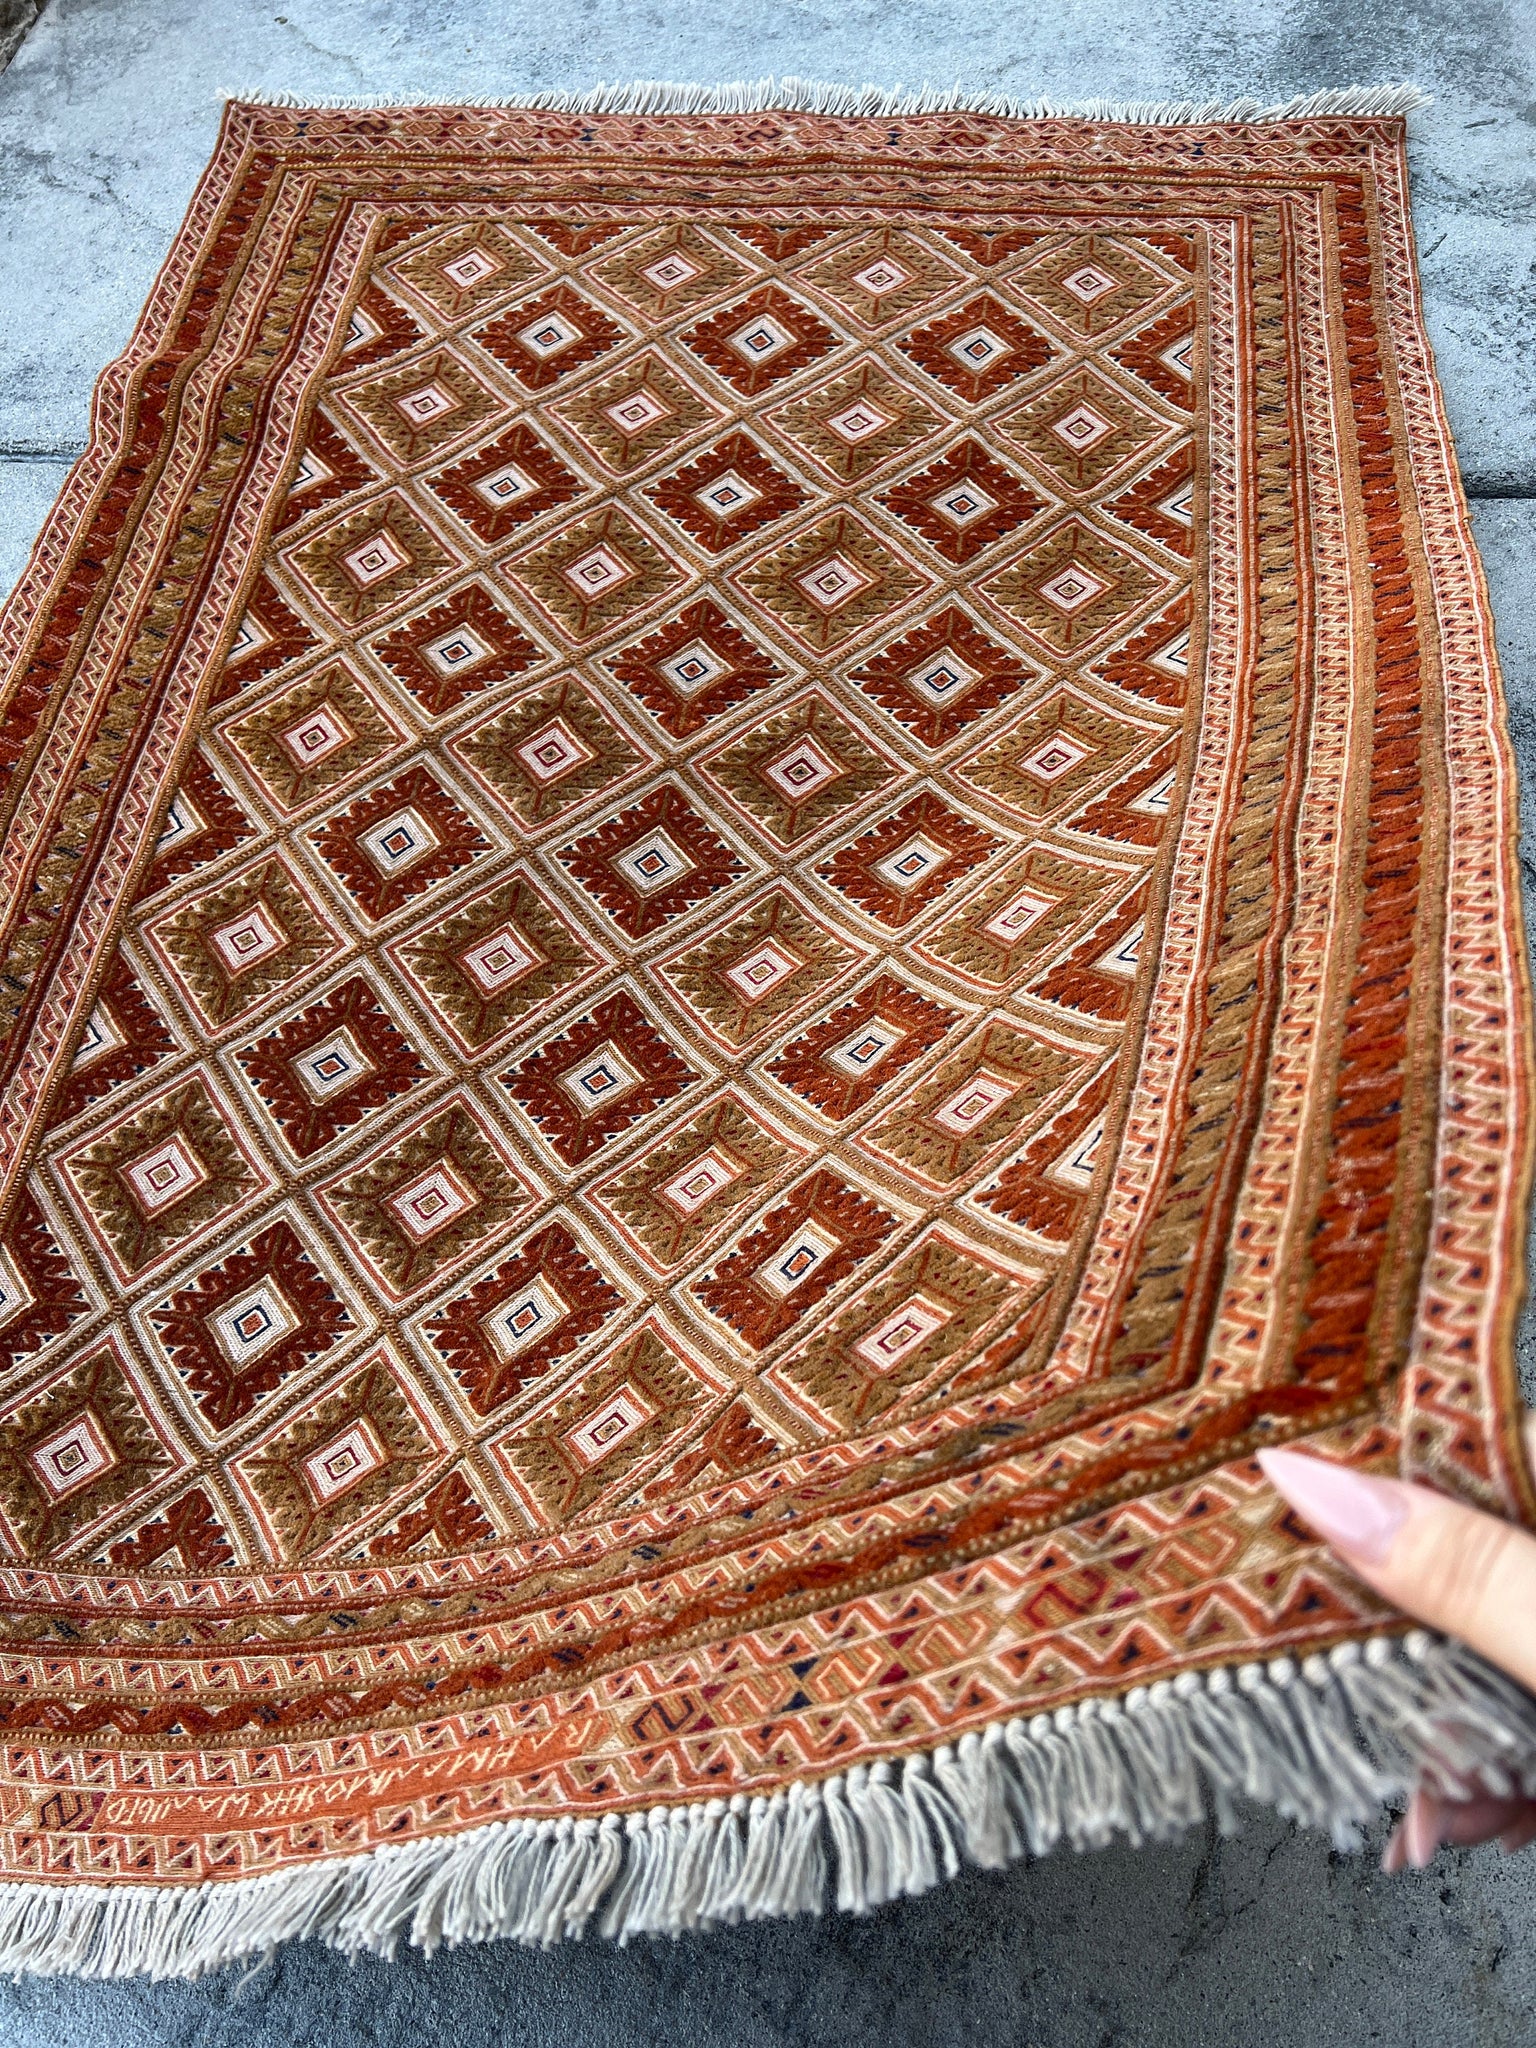 3x4 (90x120) Handmade Afghan Rug | Chocolate Brown Burnt Rust Orange Black Ivory | Geometric Tribal Wool Boho